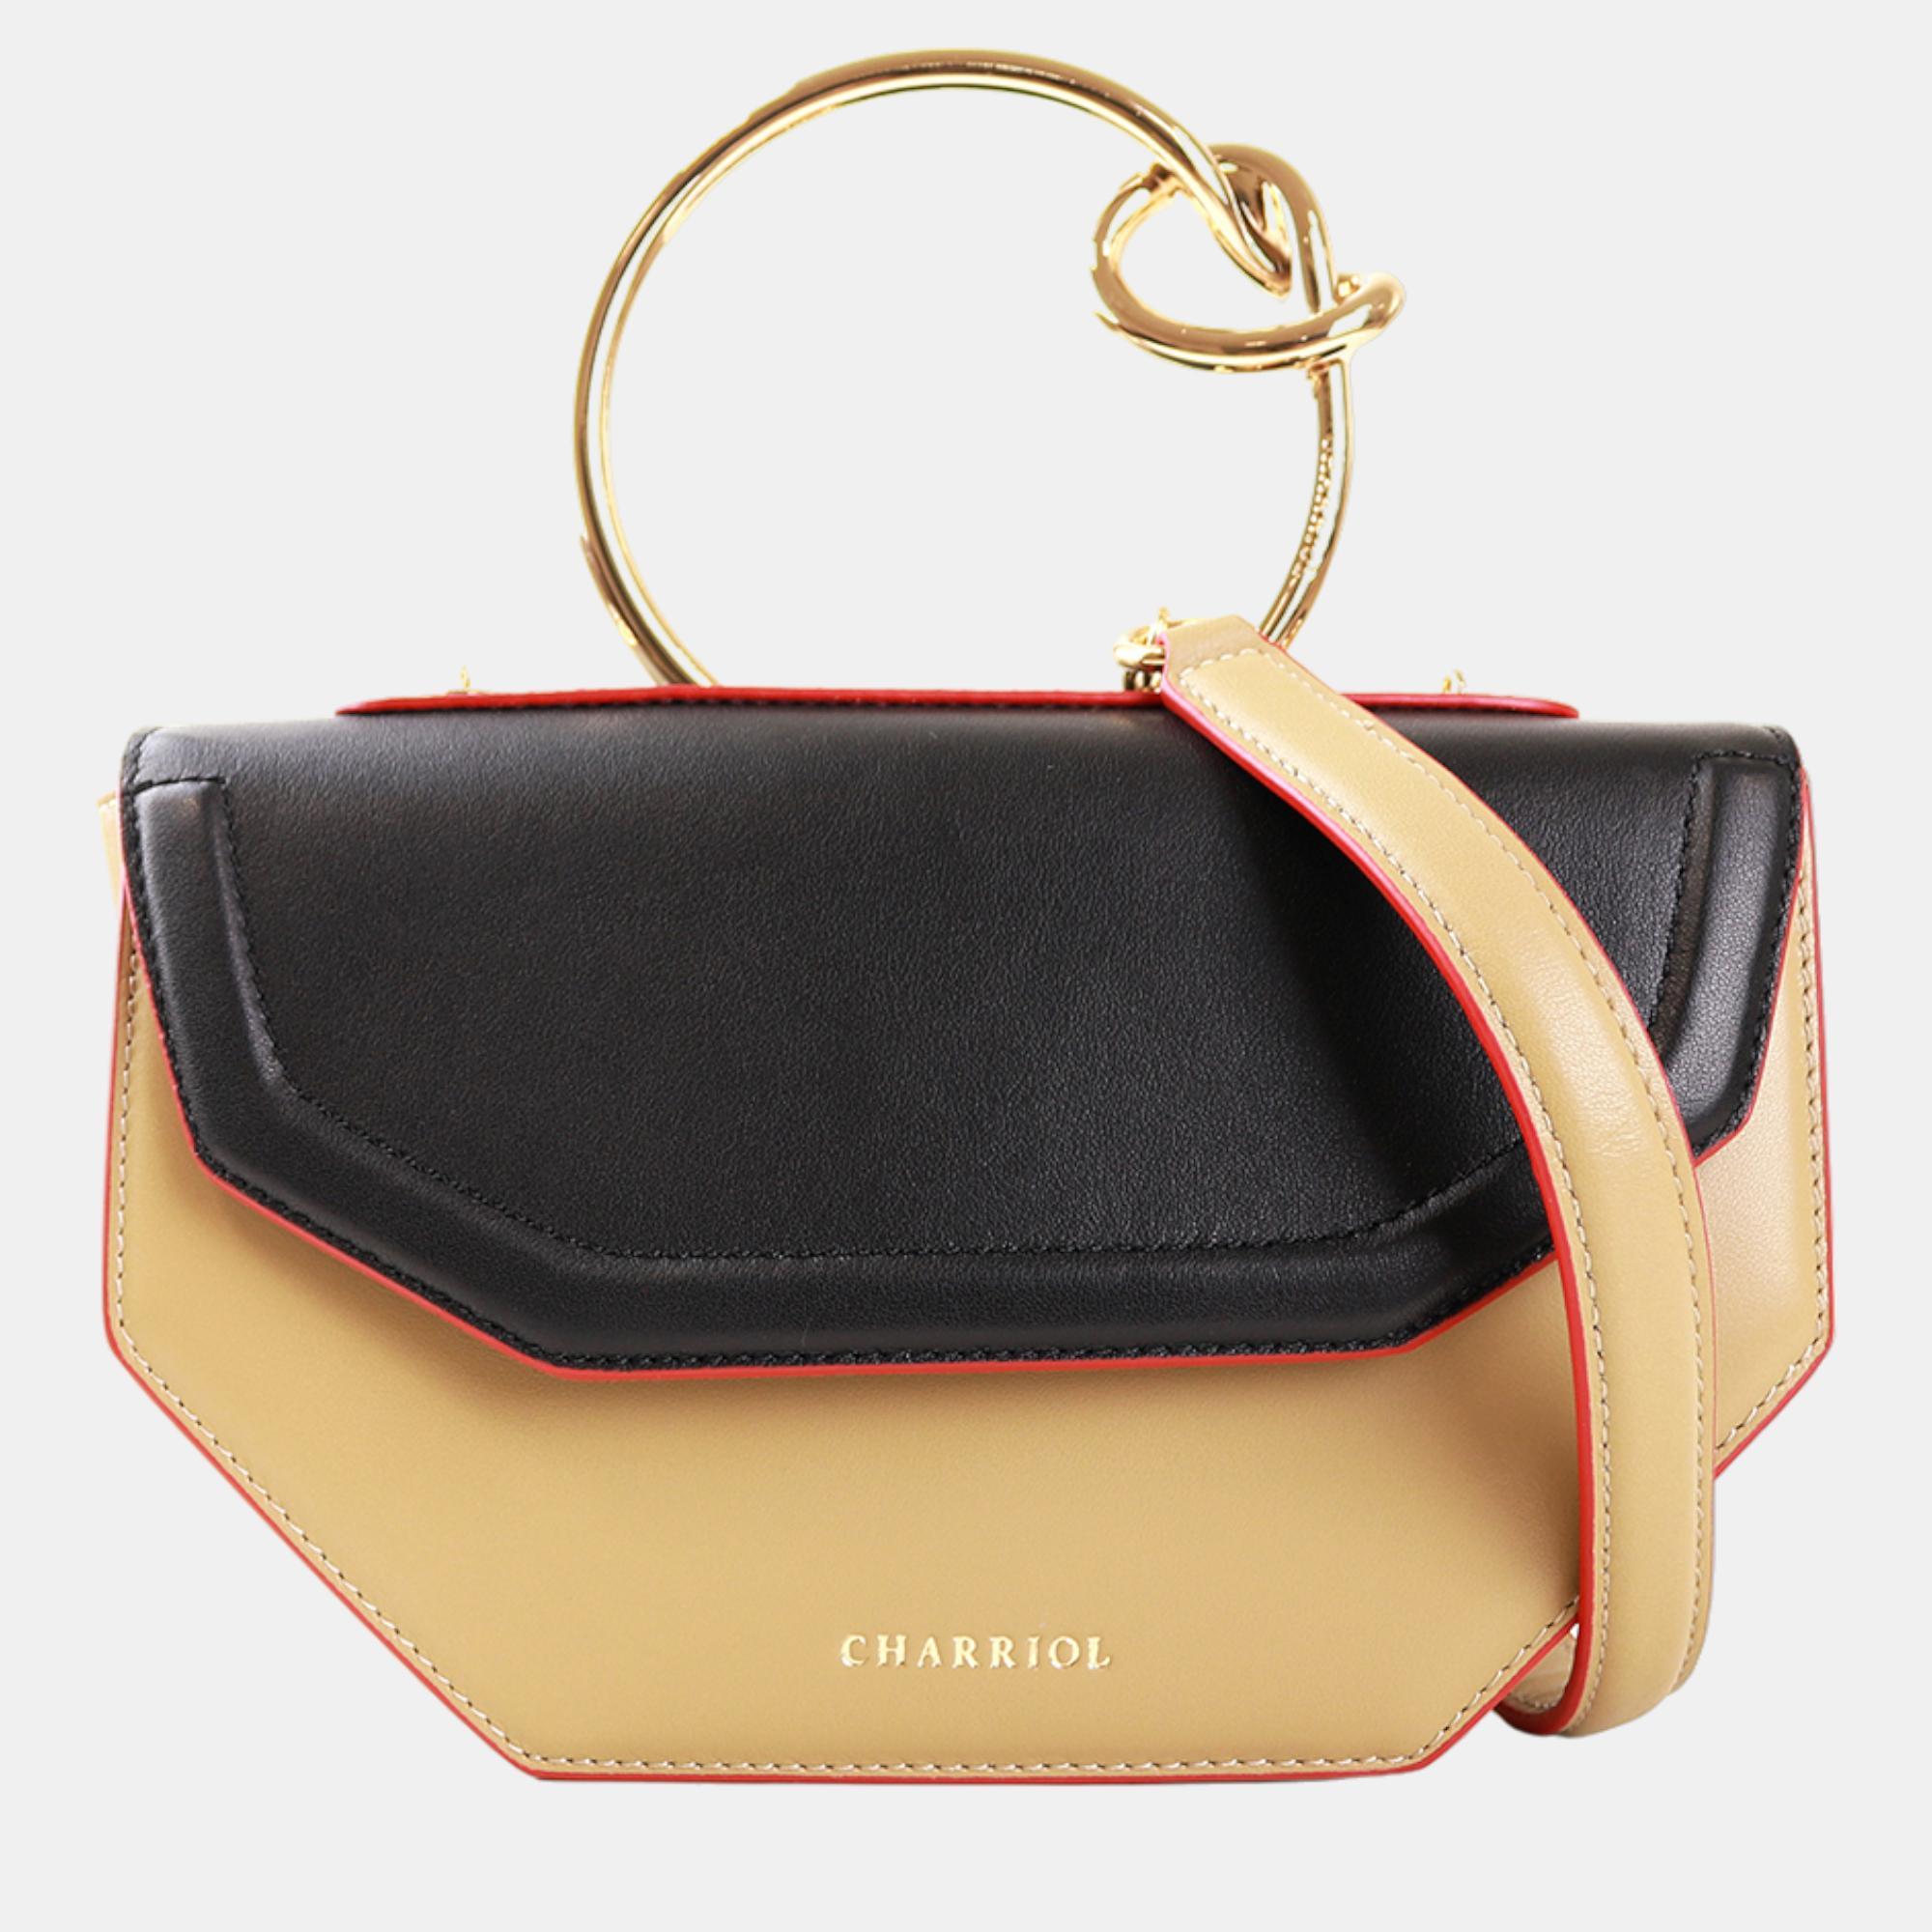 Charriol yellow/black leather zenitude handbag